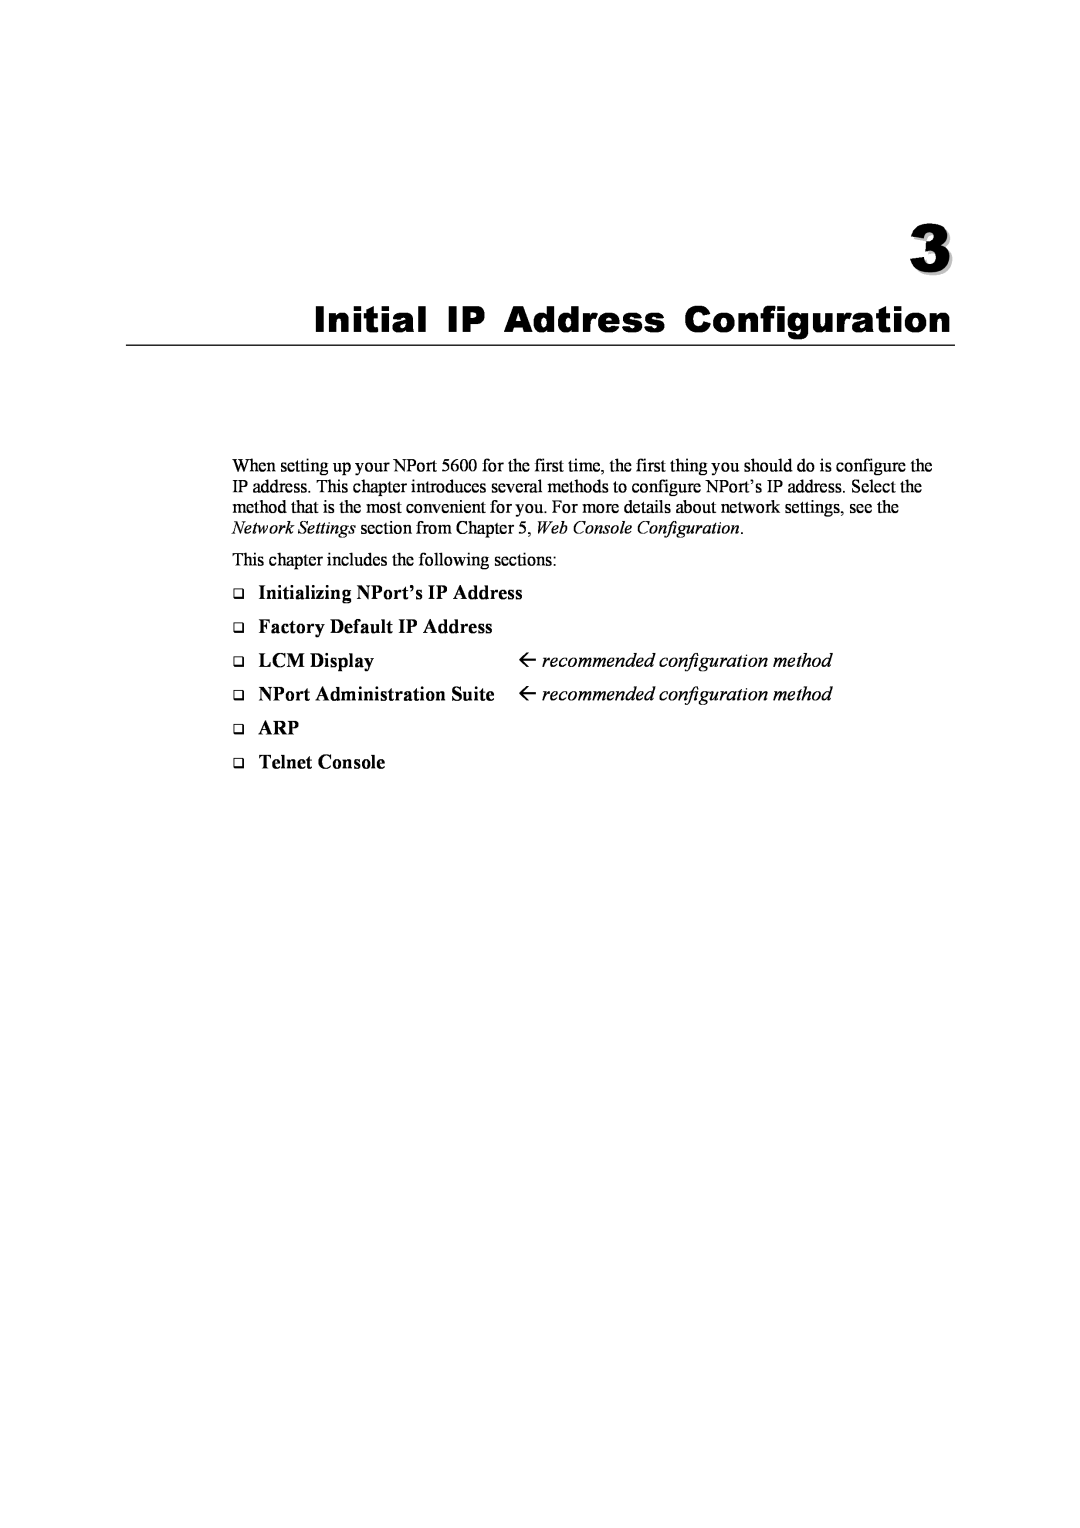 Moxa Technologies 5600 Initial IP Address Configuration, ‰ Initializing NPort’s IP Address ‰ Factory Default IP Address 